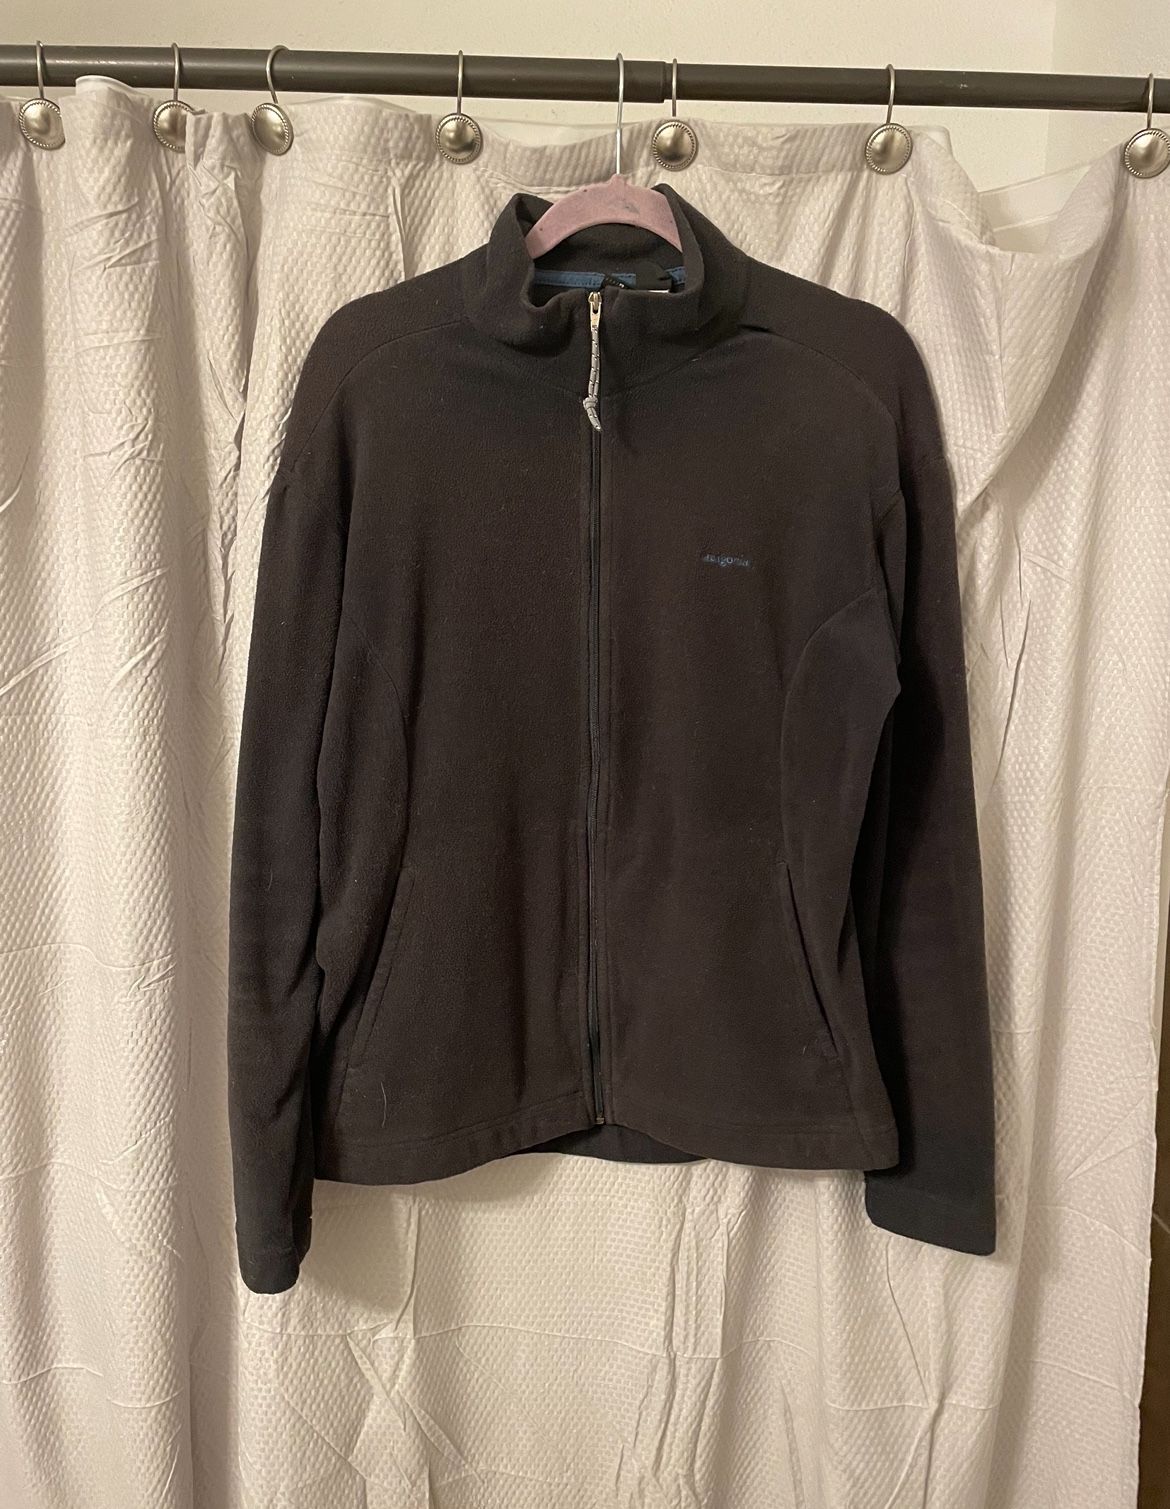 Women’s Patagonia Fleece Jacket full zip size XL